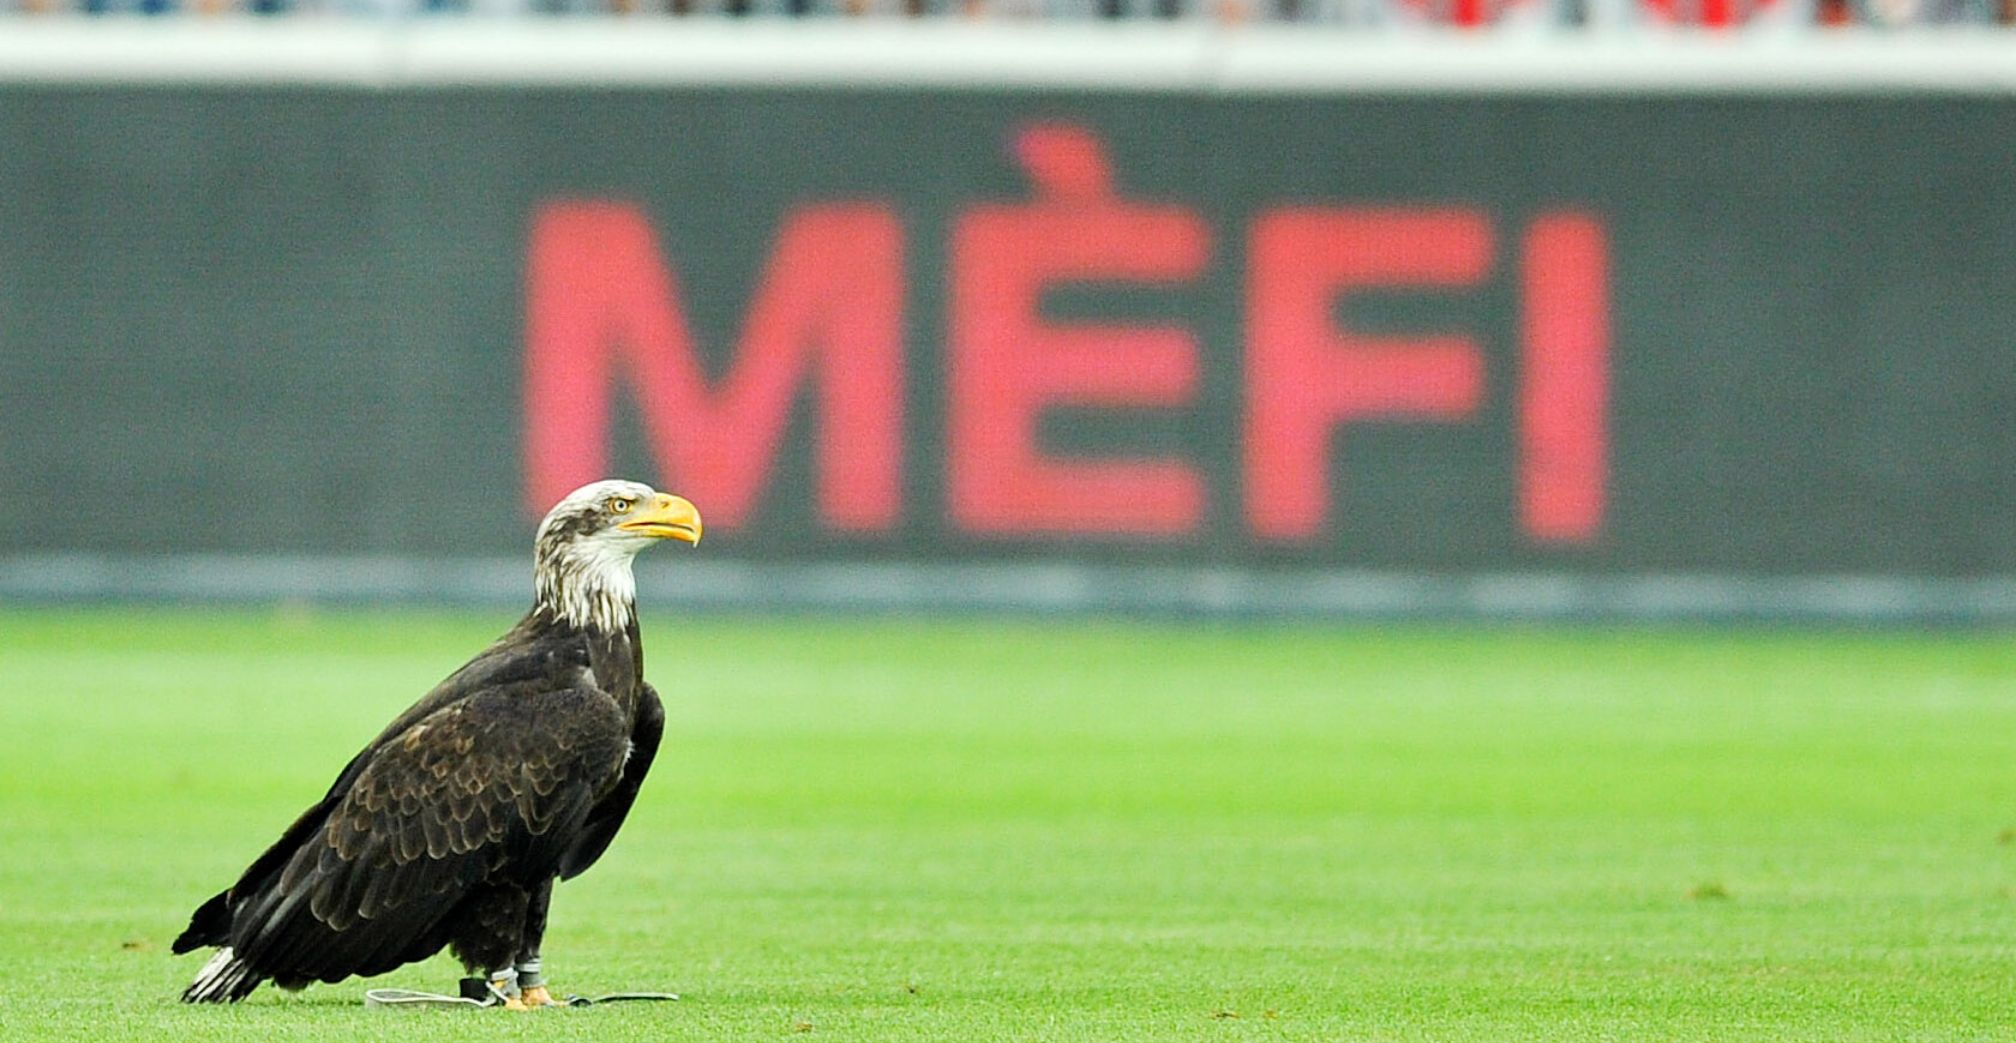 Nice, eagle on pitch